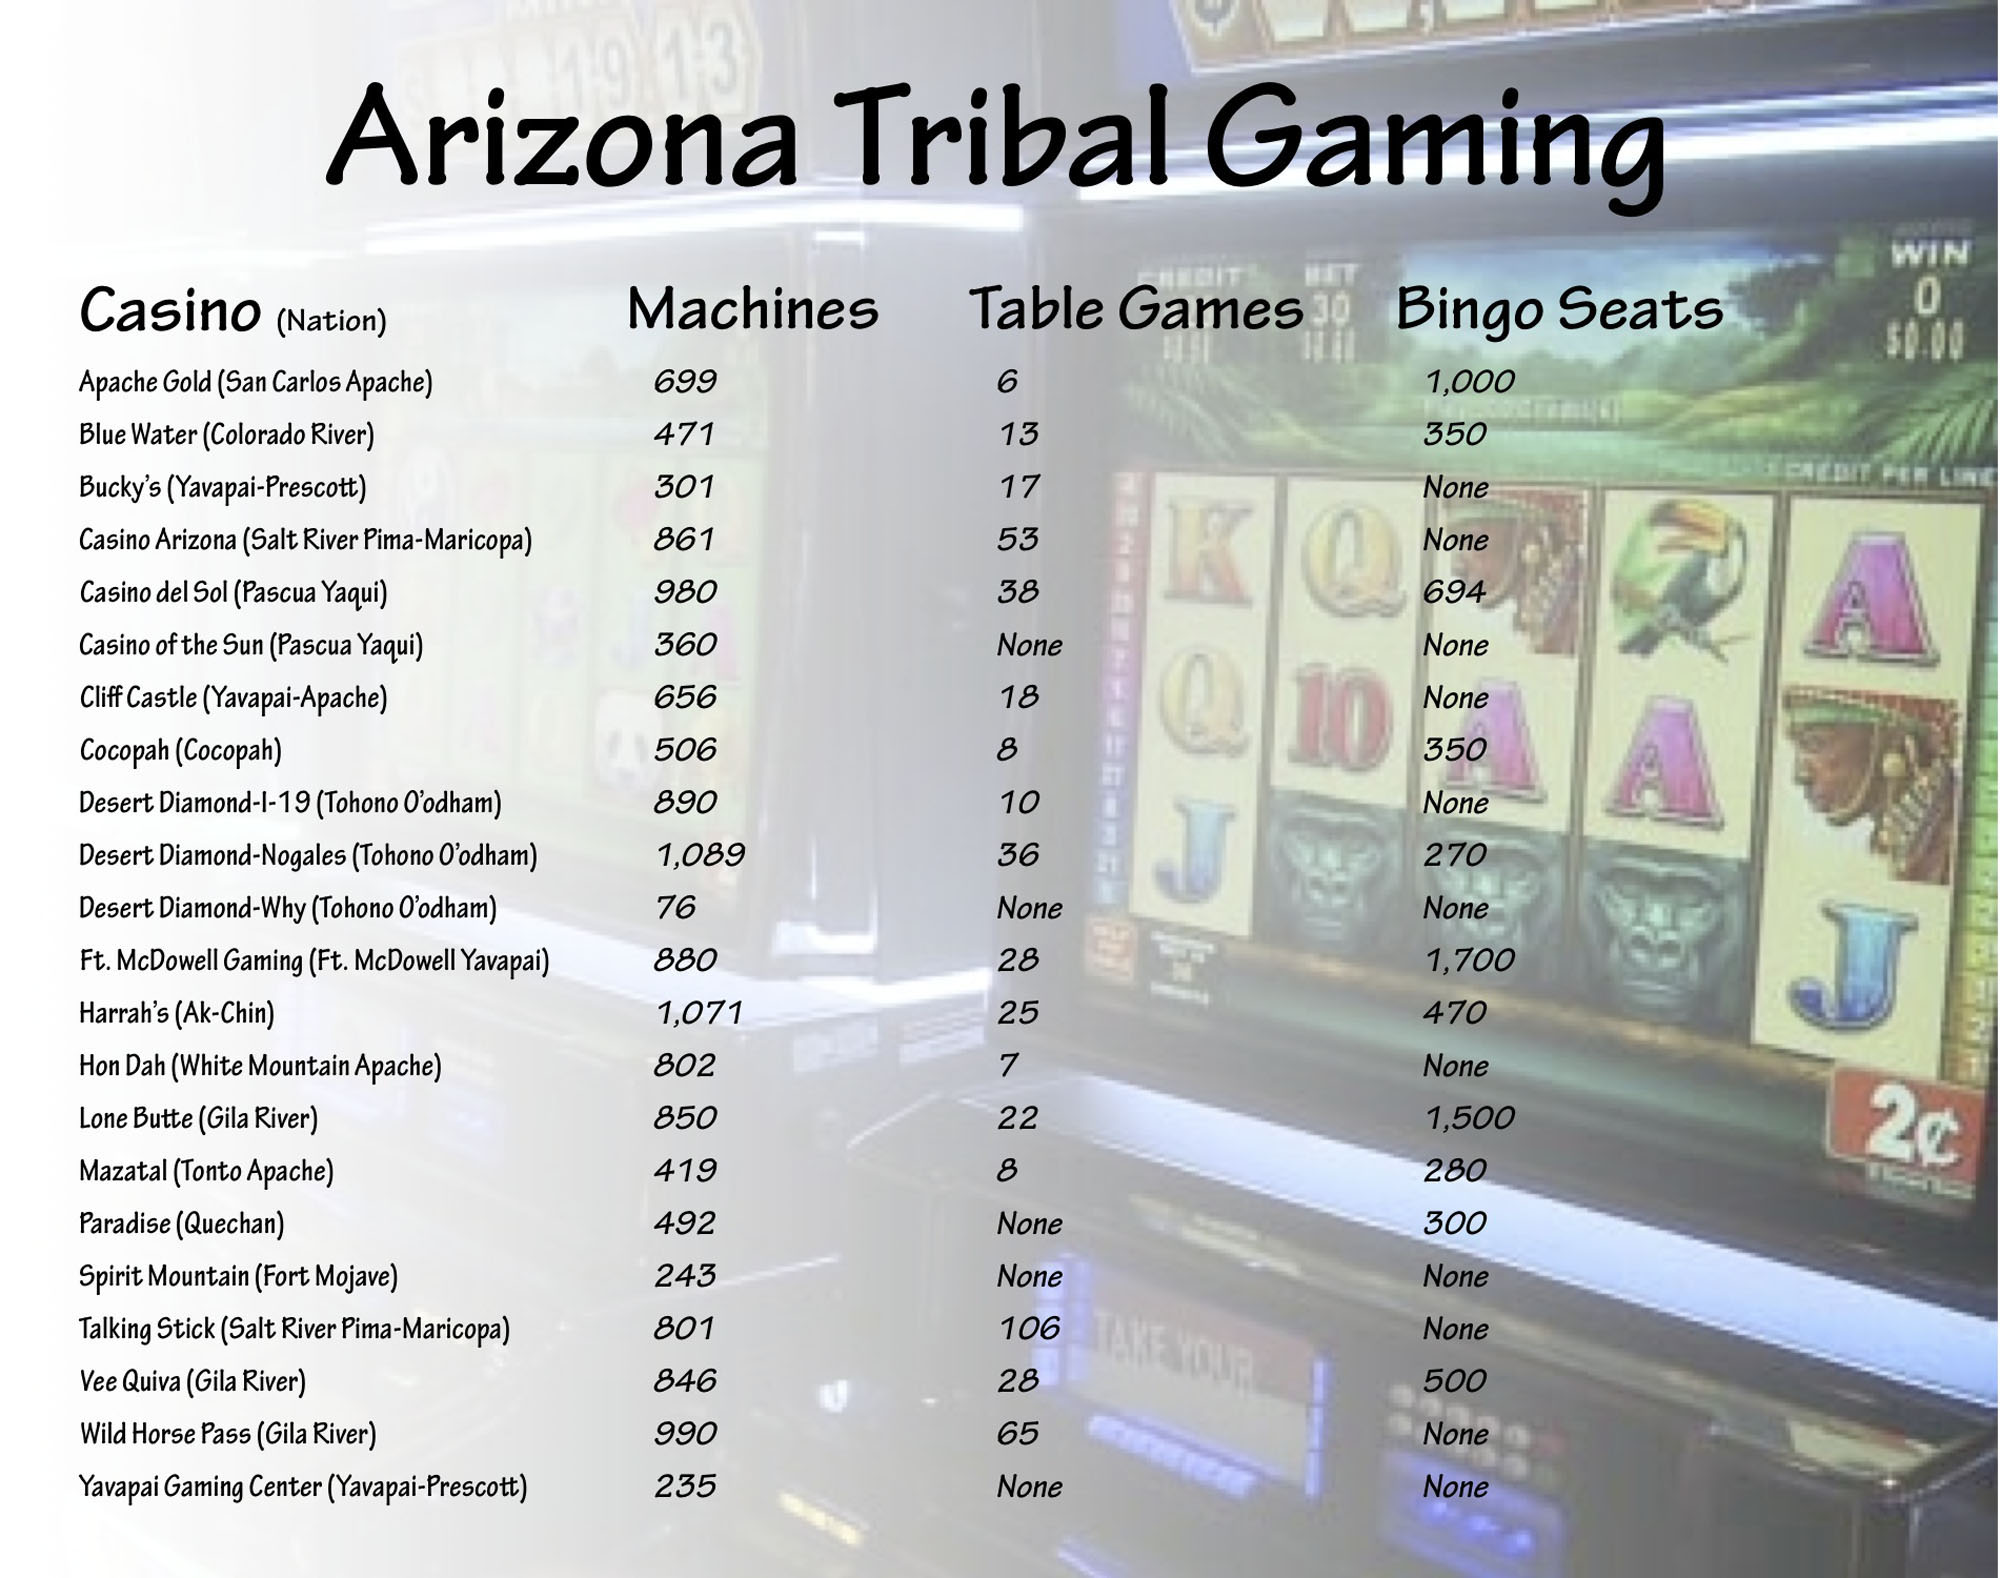 Casinos muscle in on traditional \u2018Five C\u2019s\u2019 behind Arizona economy ...